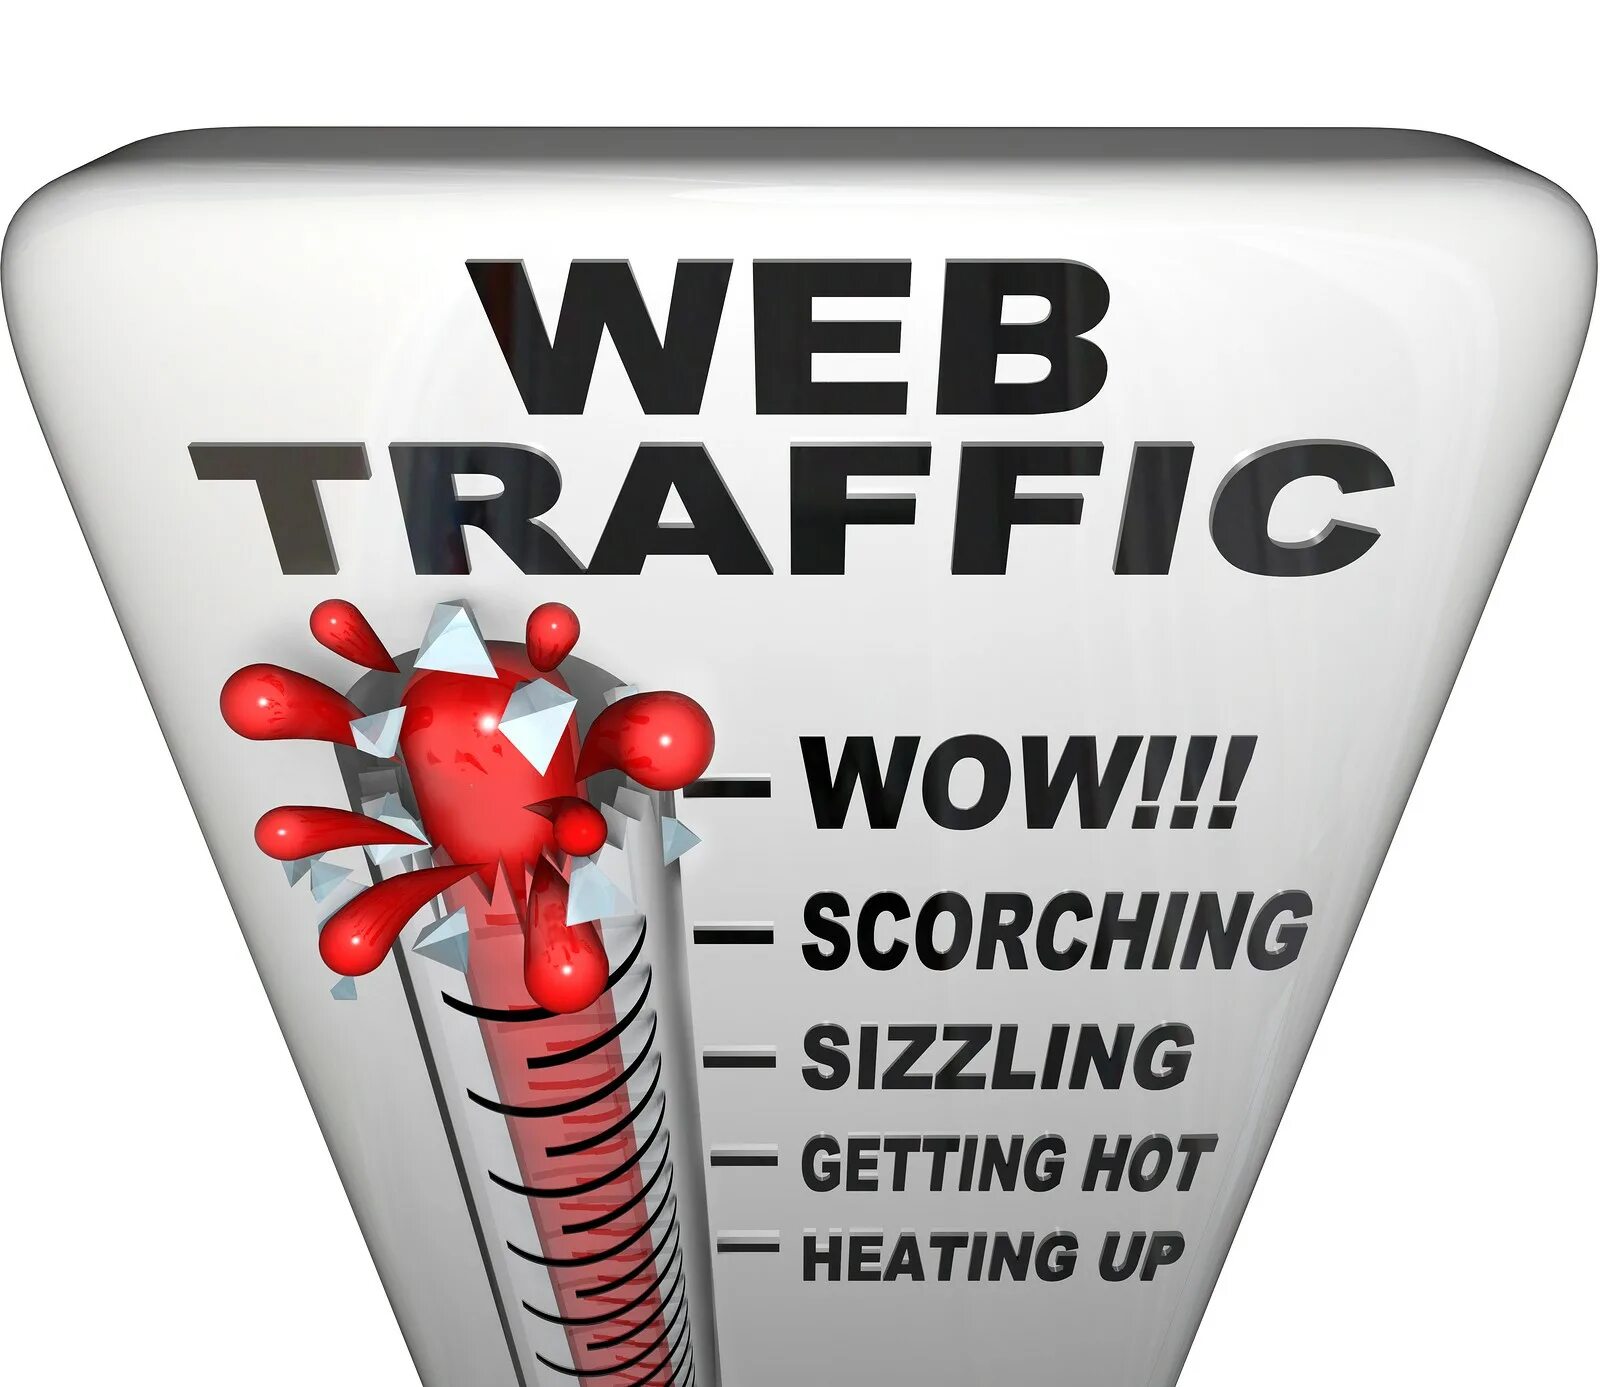 Website traffic. Web Traffic. Веб трафик. Web Traffic images. Сео трафик.